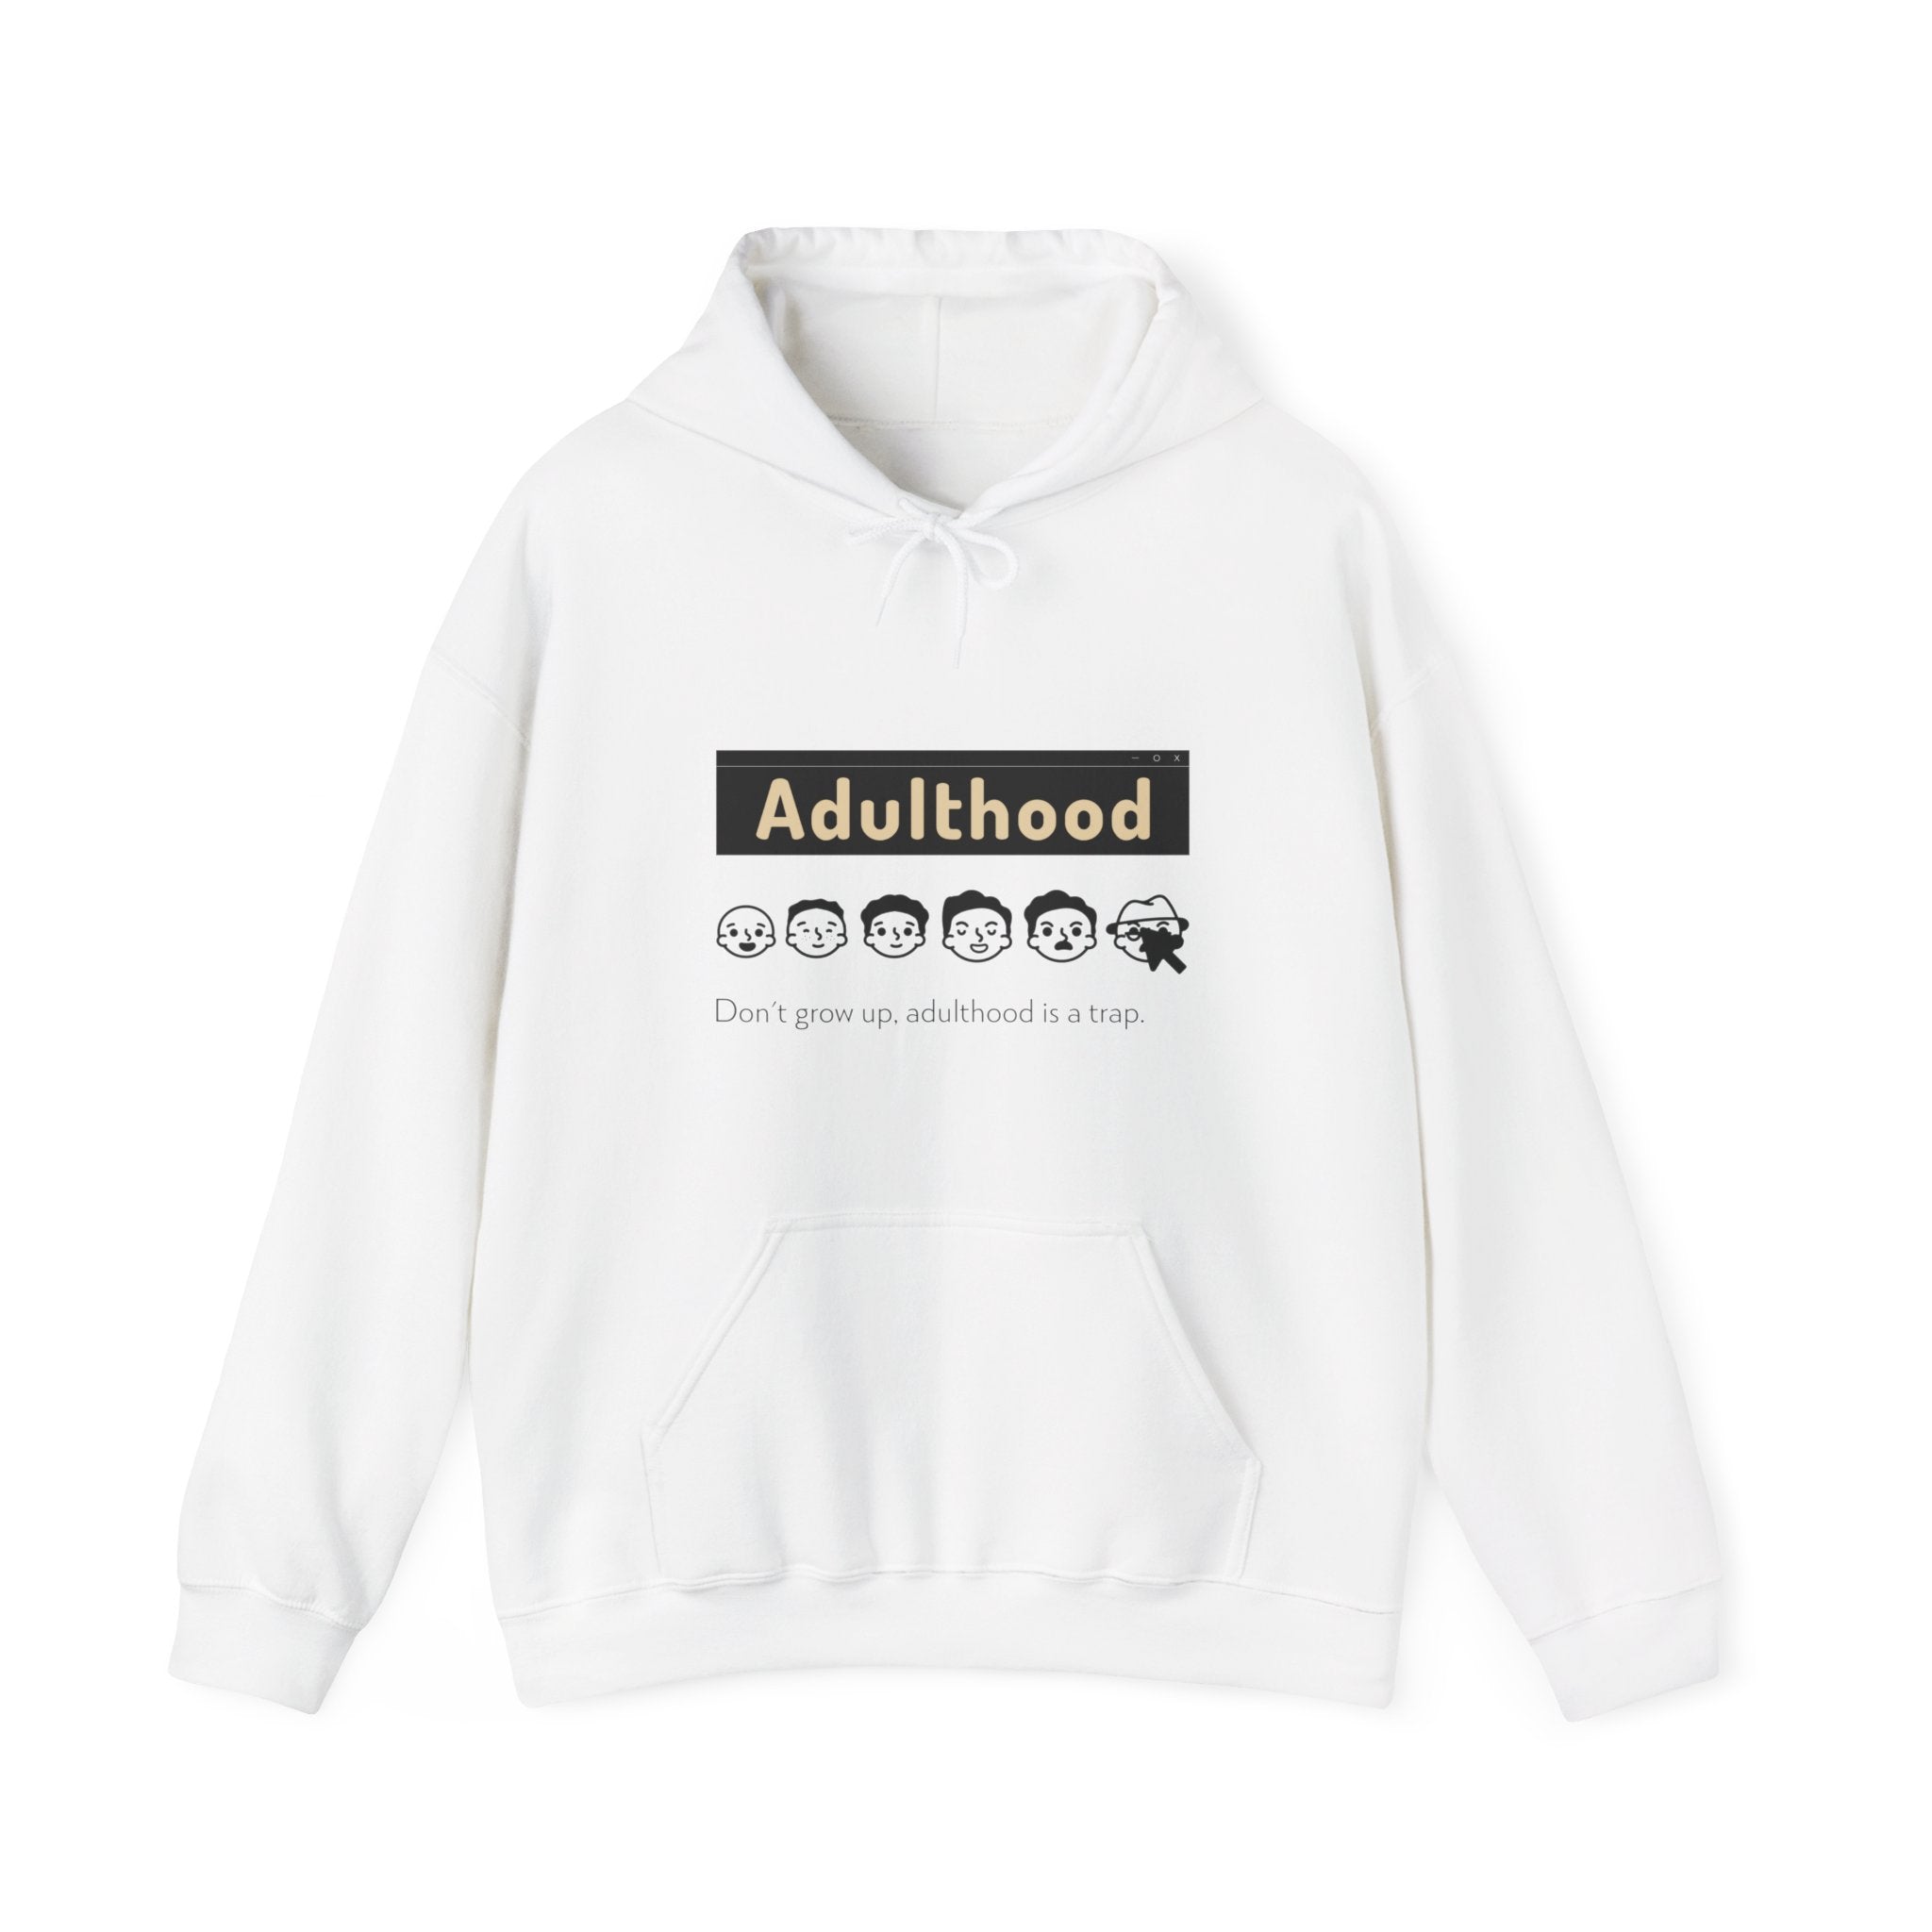 Adulthood is a Trap - Hooded Sweatshirt